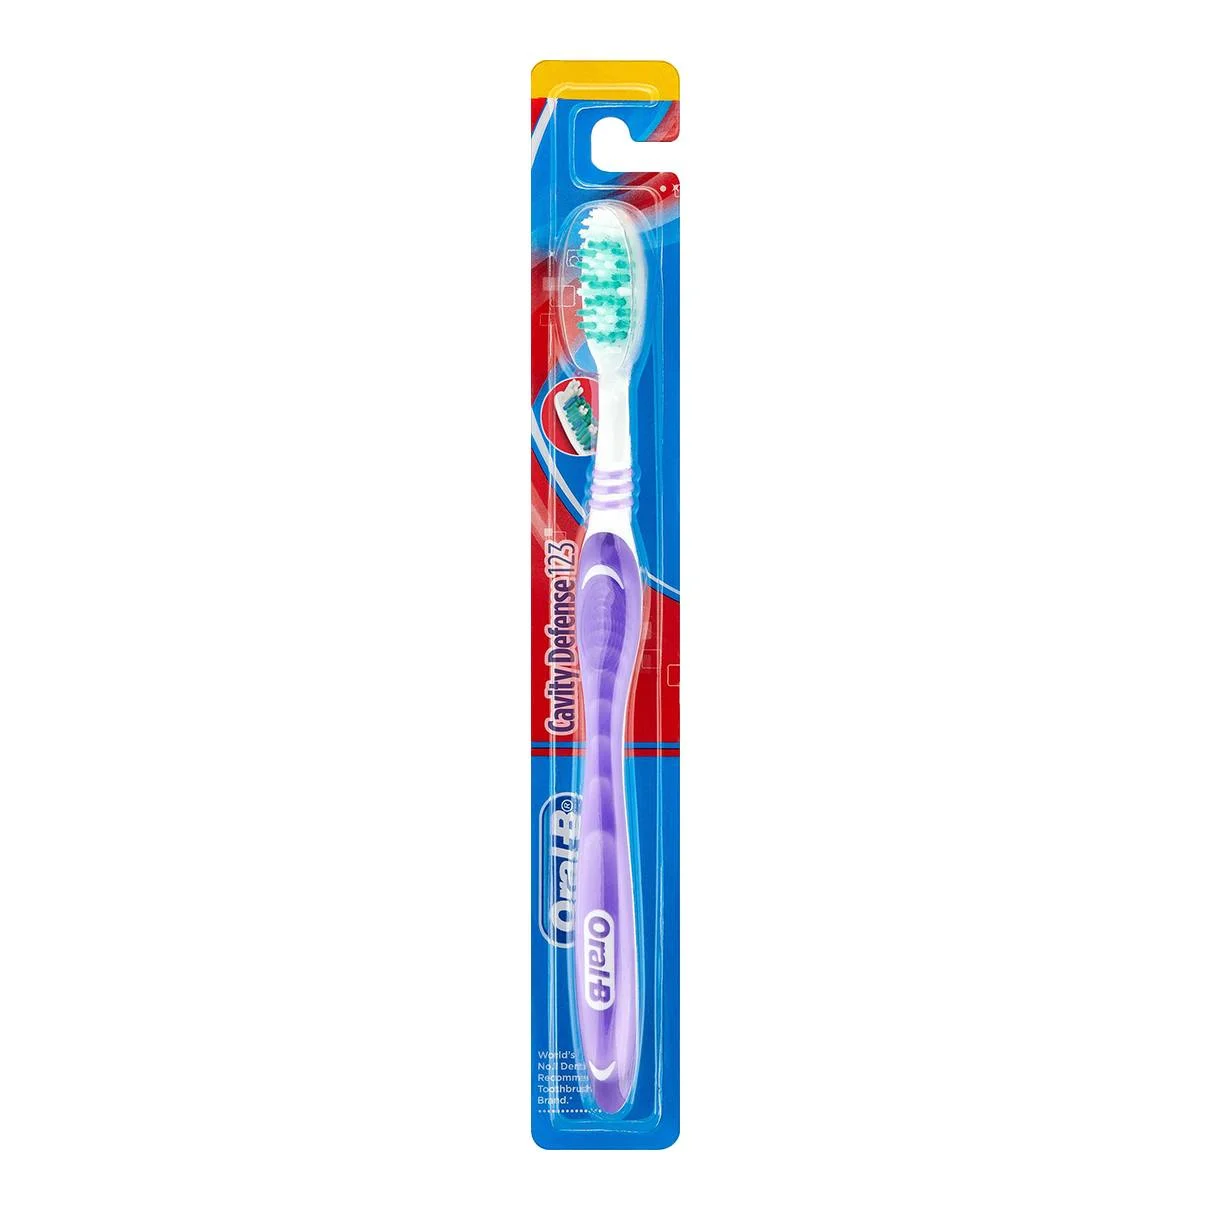 Oral-B Cavity Defense 123 Manual Toothbrush 